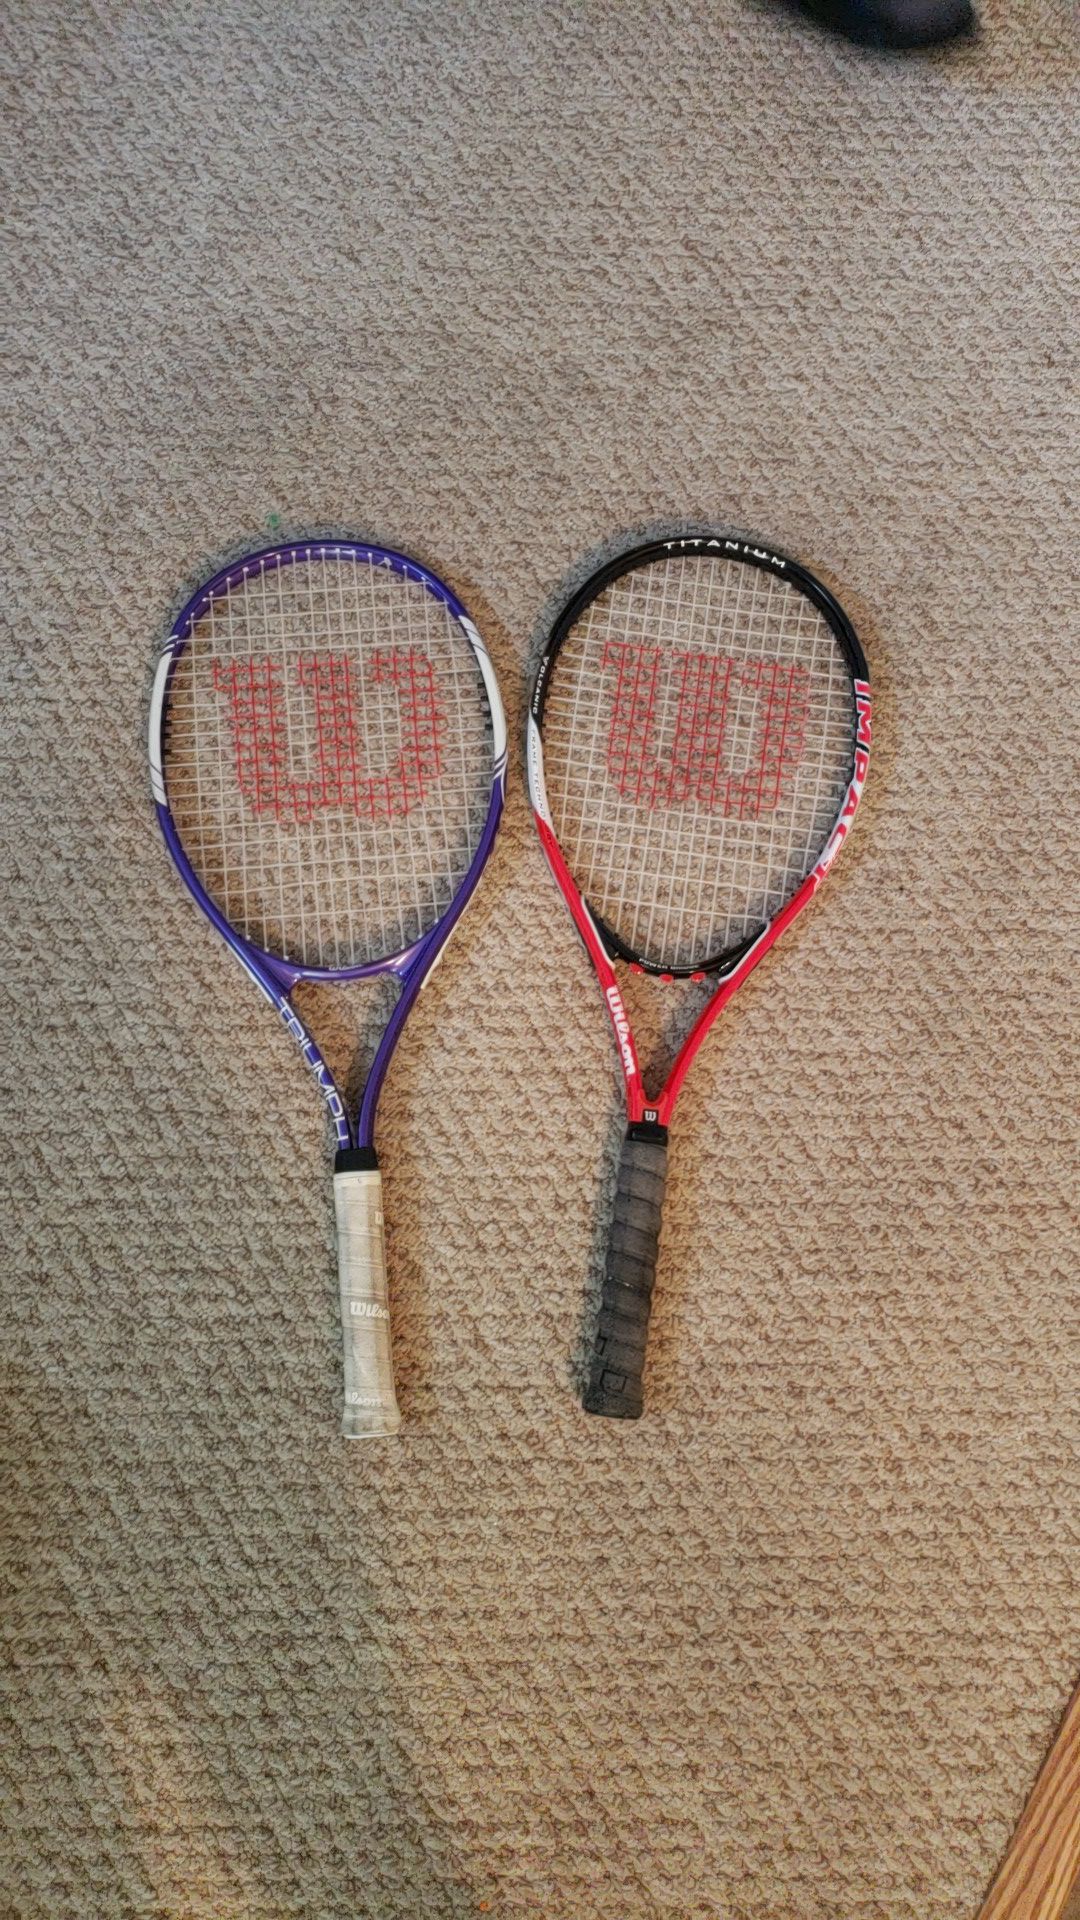 Wilson Triumph and Wilson Impact tennis rackets.